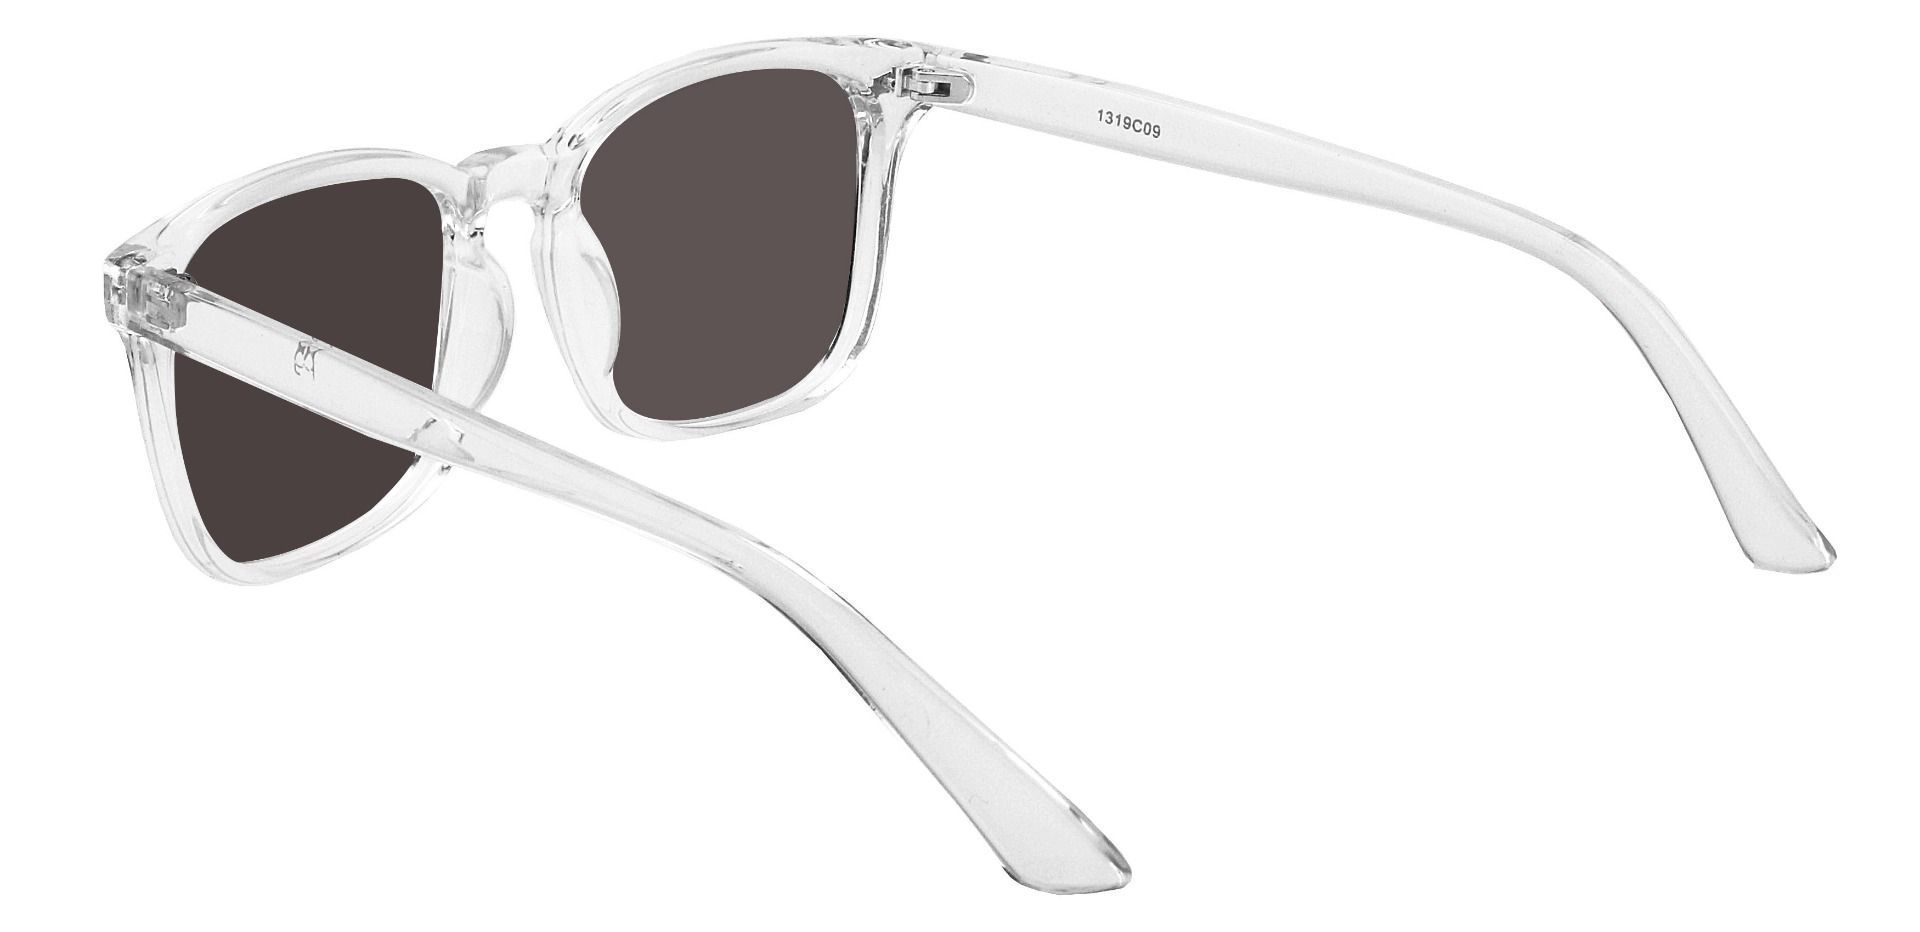 Rogan Square Prescription Sunglasses - Clear Frame With Gray Lenses